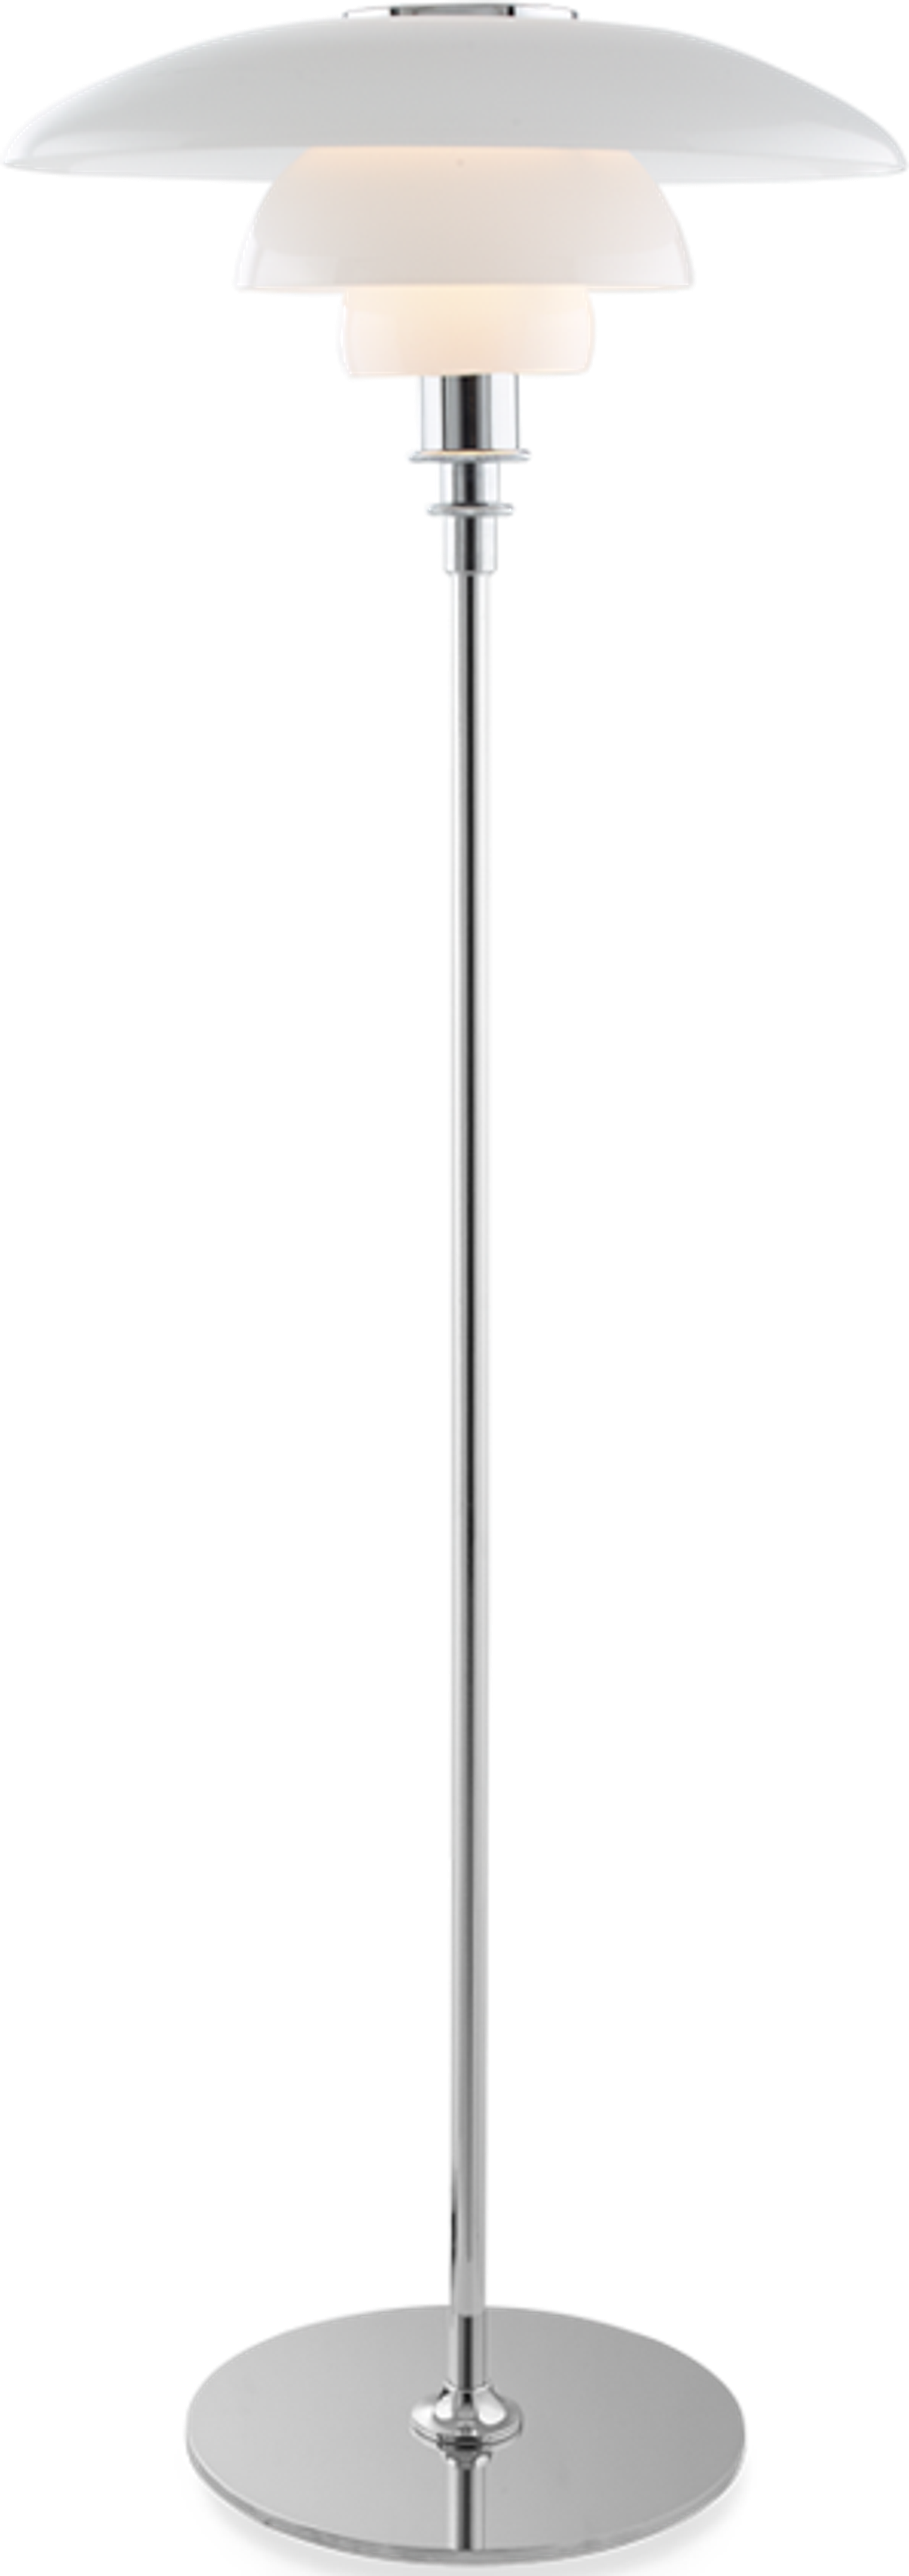 Lampada da terra alta PH 4,5 - 3,5 Style Chrome image.